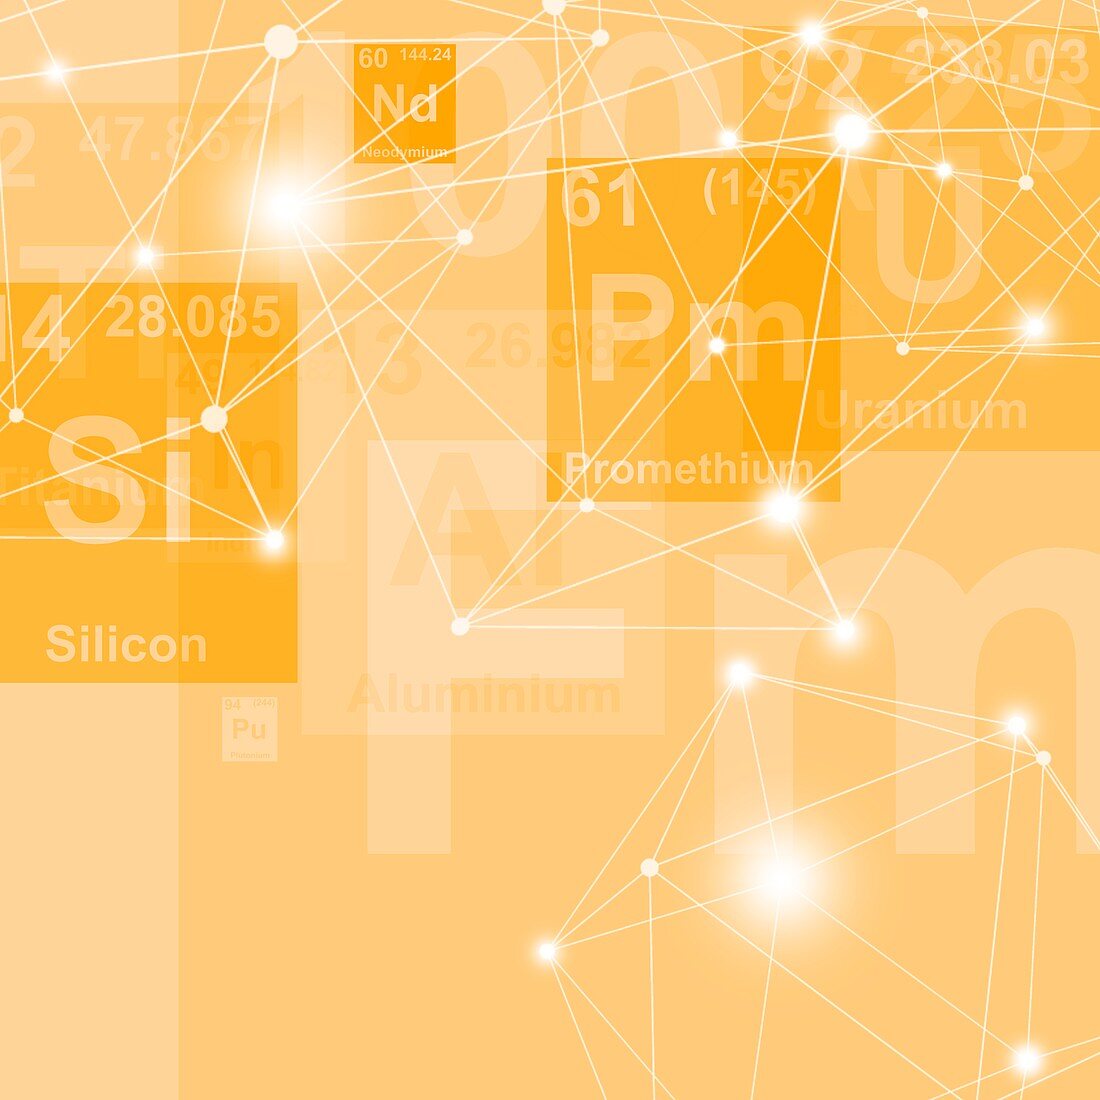 Silicon and promethium chemical elements, illustration